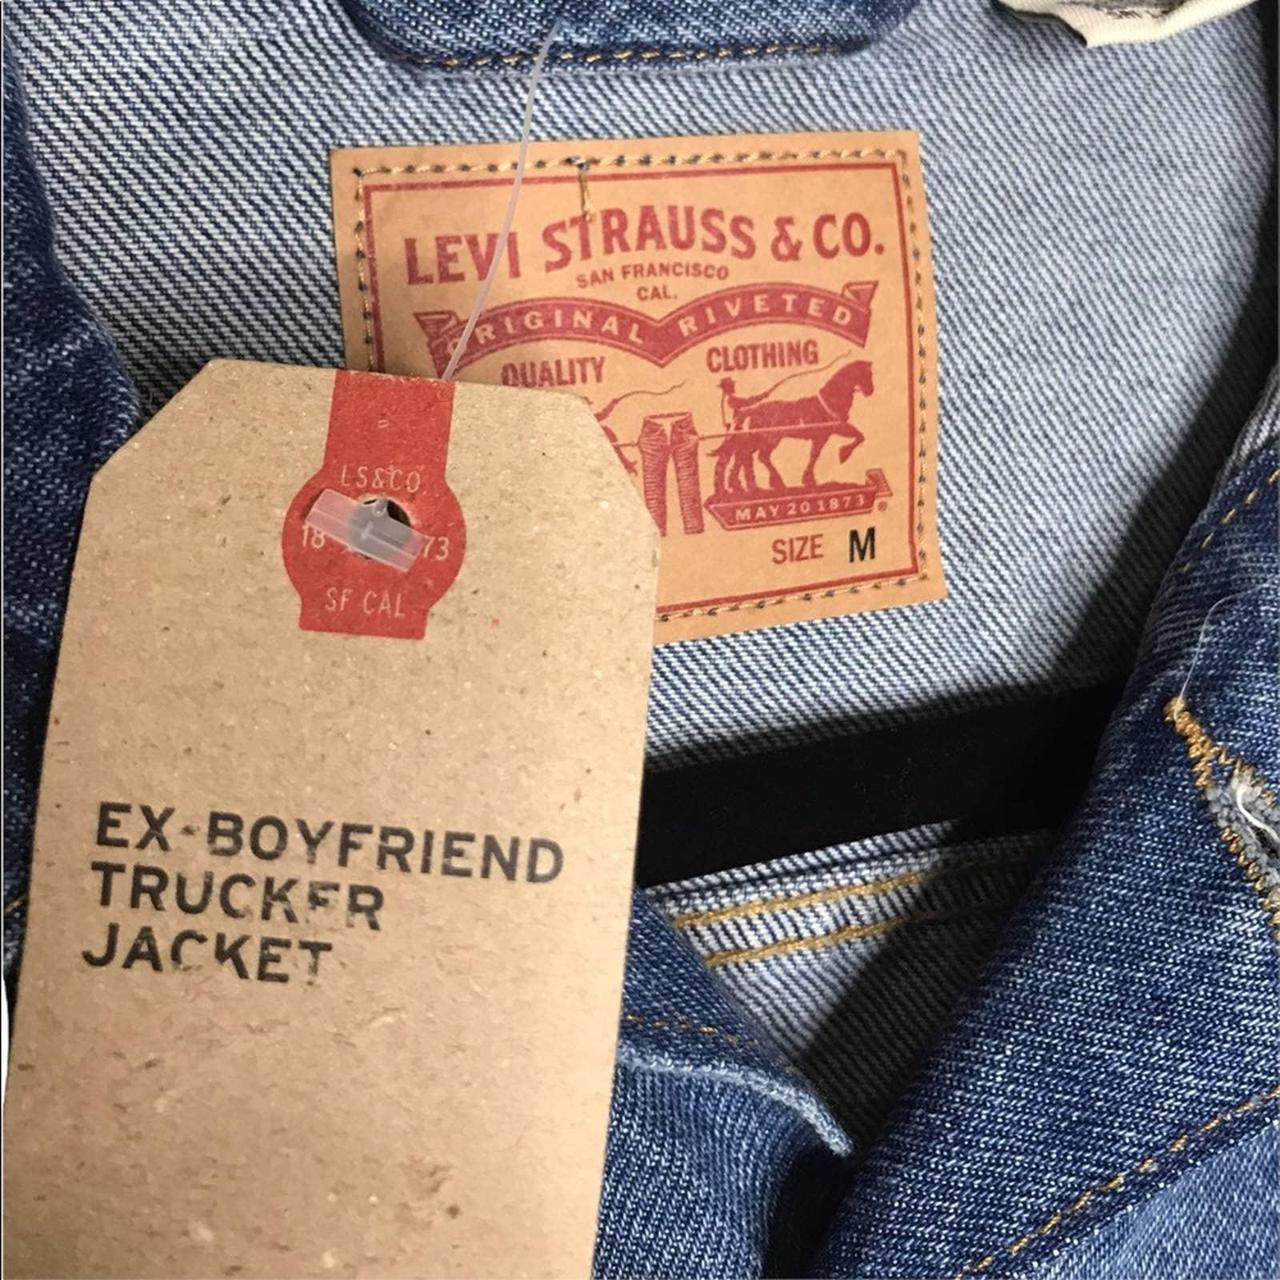 Product Image 3 - Levi’s Ex-Boyfriend Trucker Denim Jacket

An